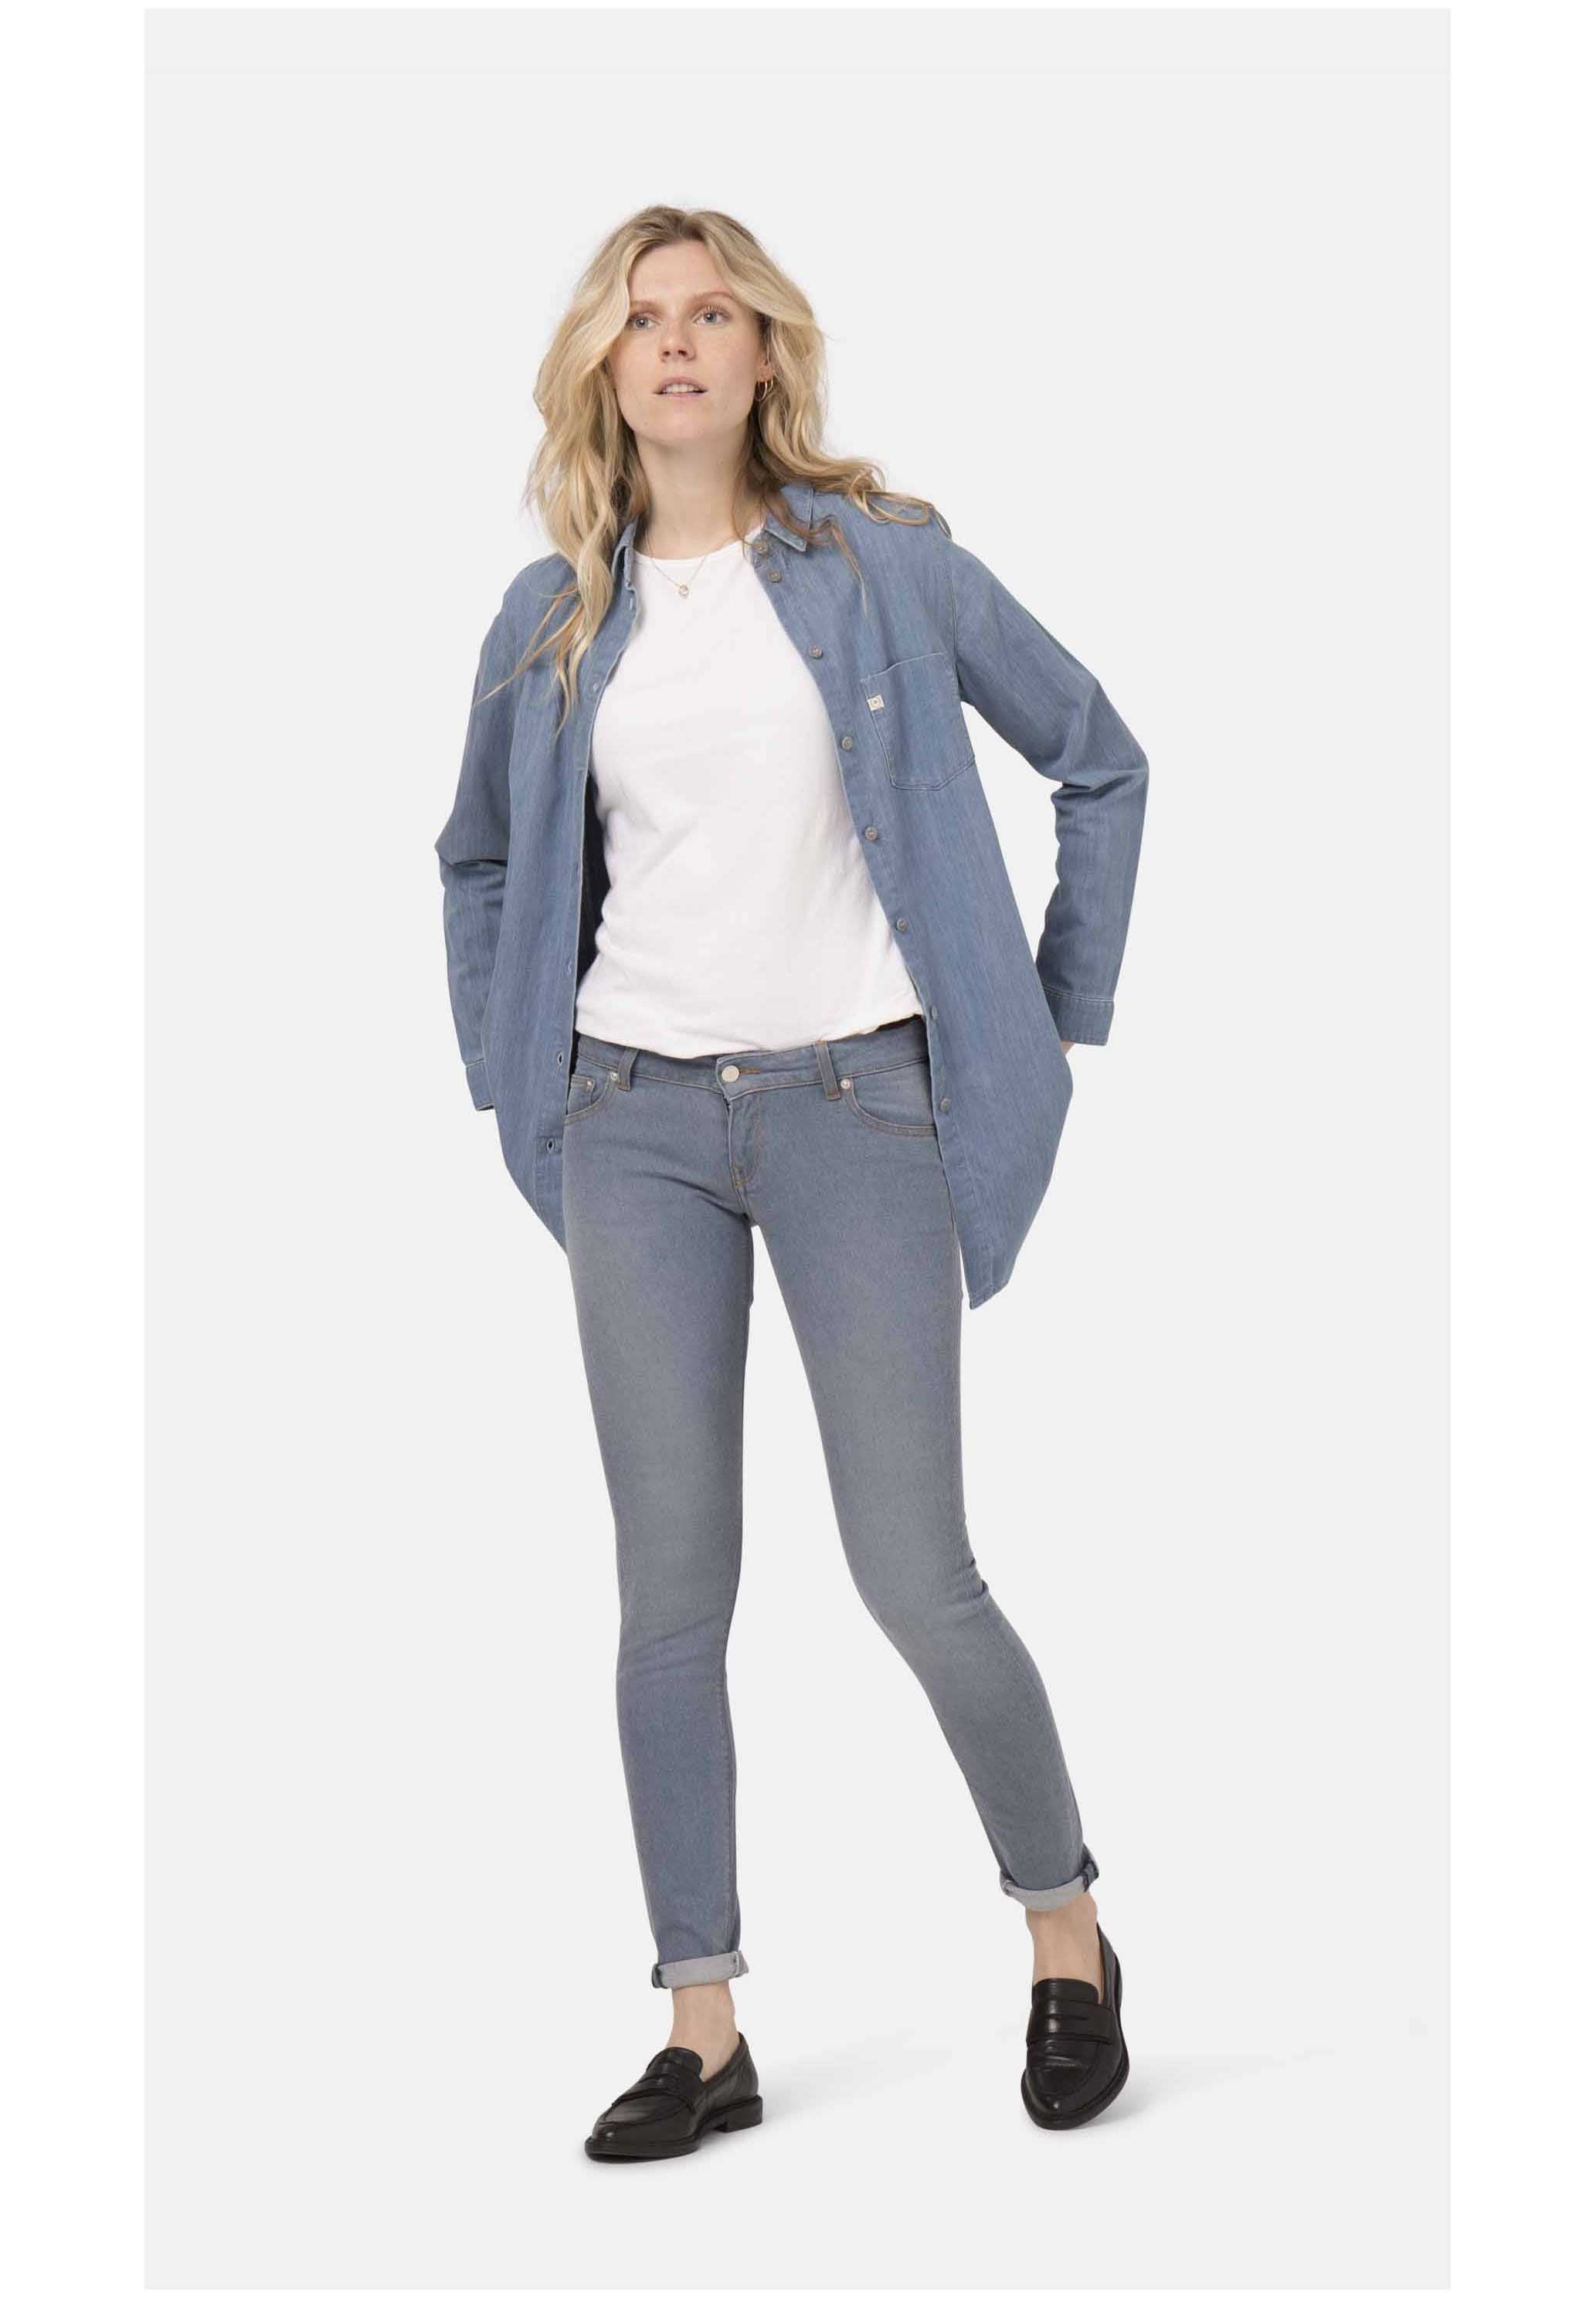 LILLY Womens skinny blue jeans by MUD, W27 / L30